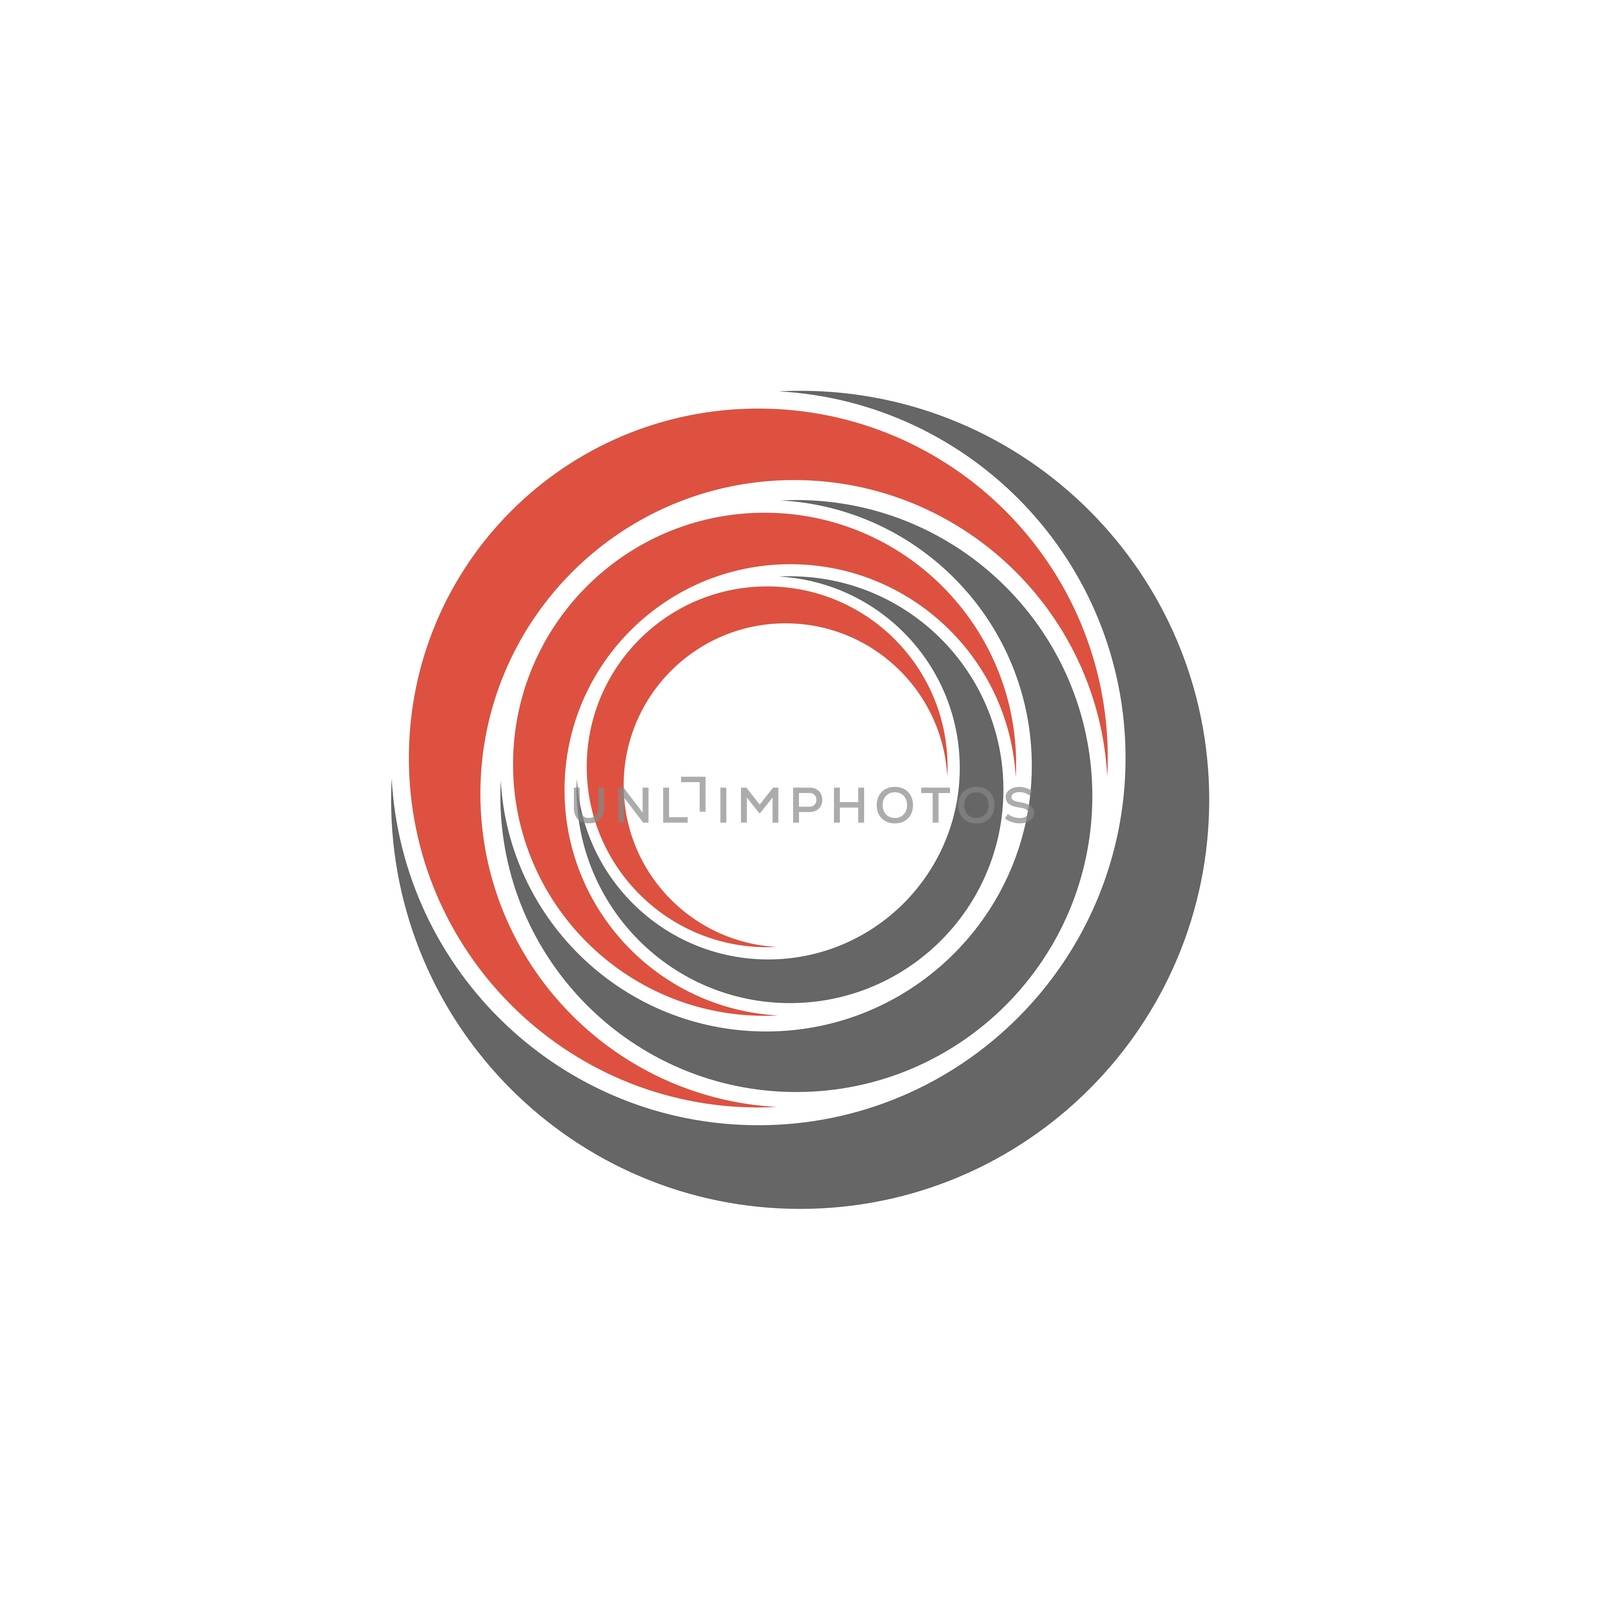 Whirlpool vector design Logo Template Illustration Design Illustration Design. Vector EPS 10.